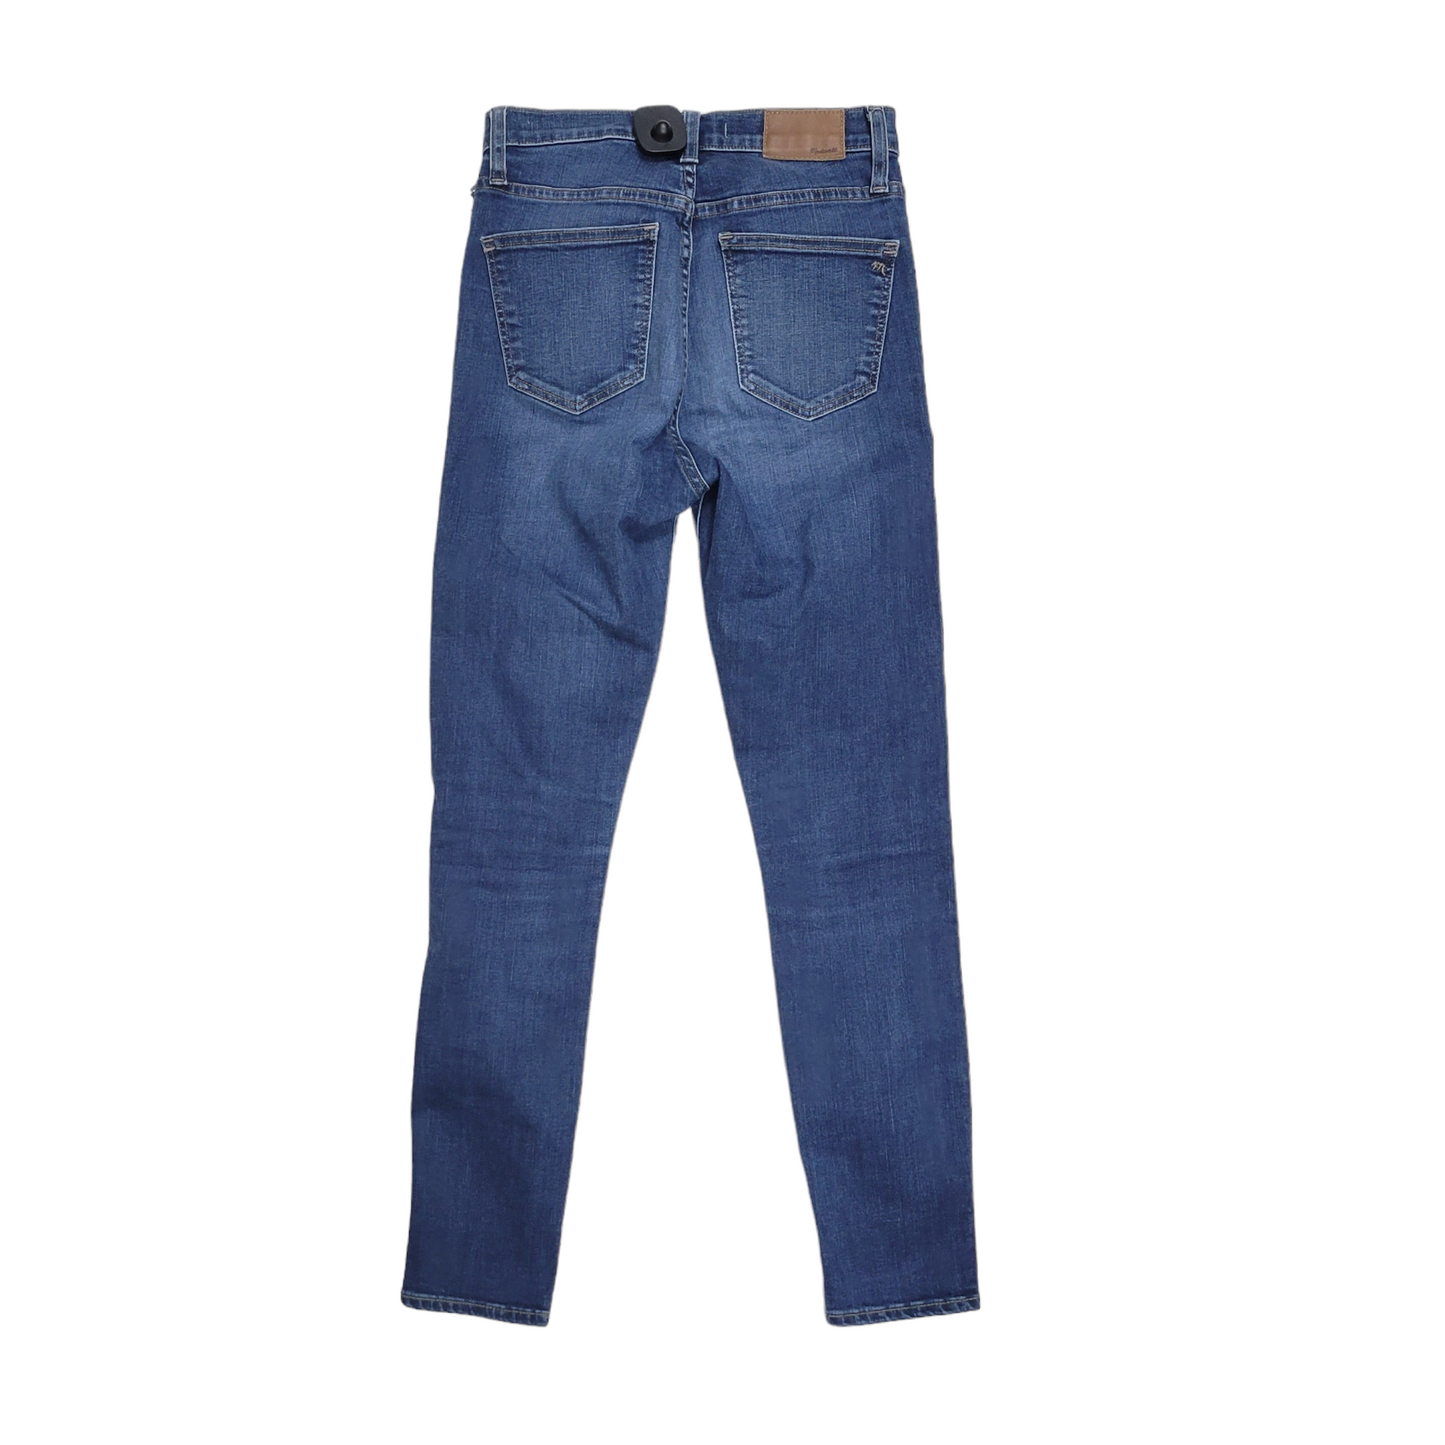 Blue Denim Jeans Skinny Madewell, Size 2